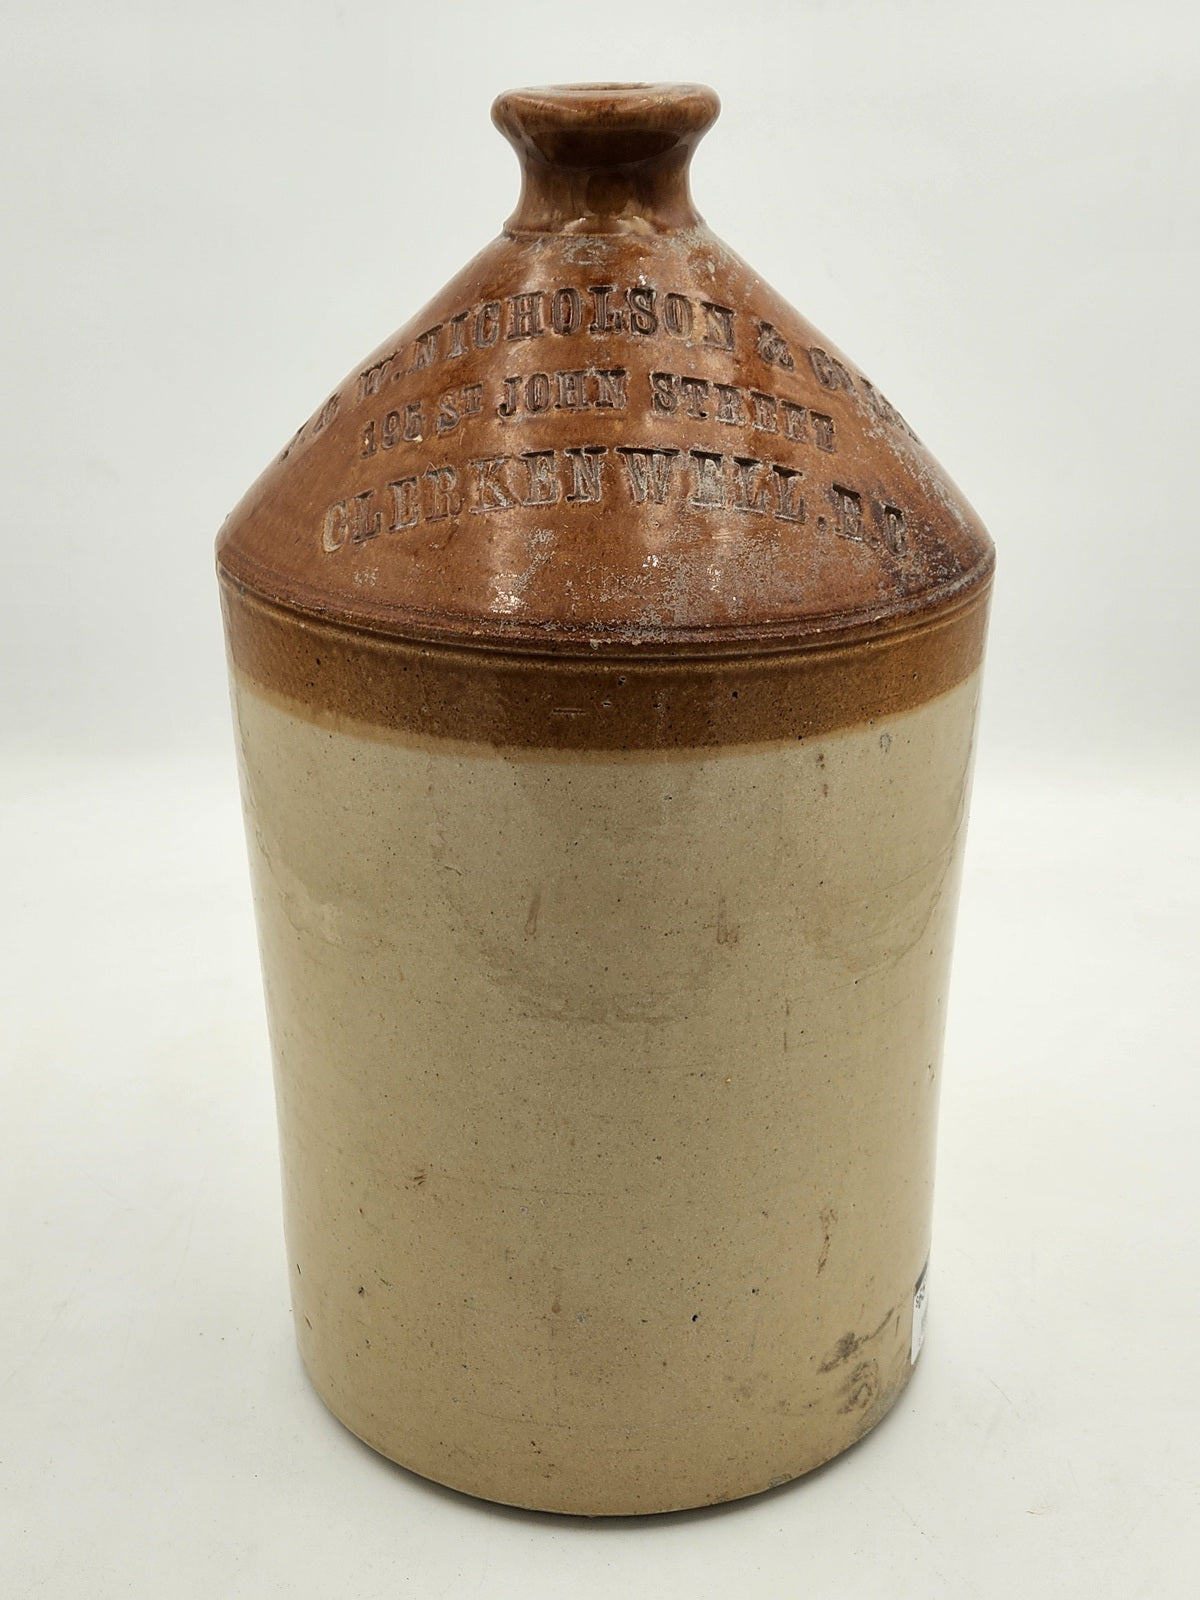 Antique J&W Nicholson Co LTD. Liquor Jug From Clerkenwell, London, UK - Made by Doulton Lambeth